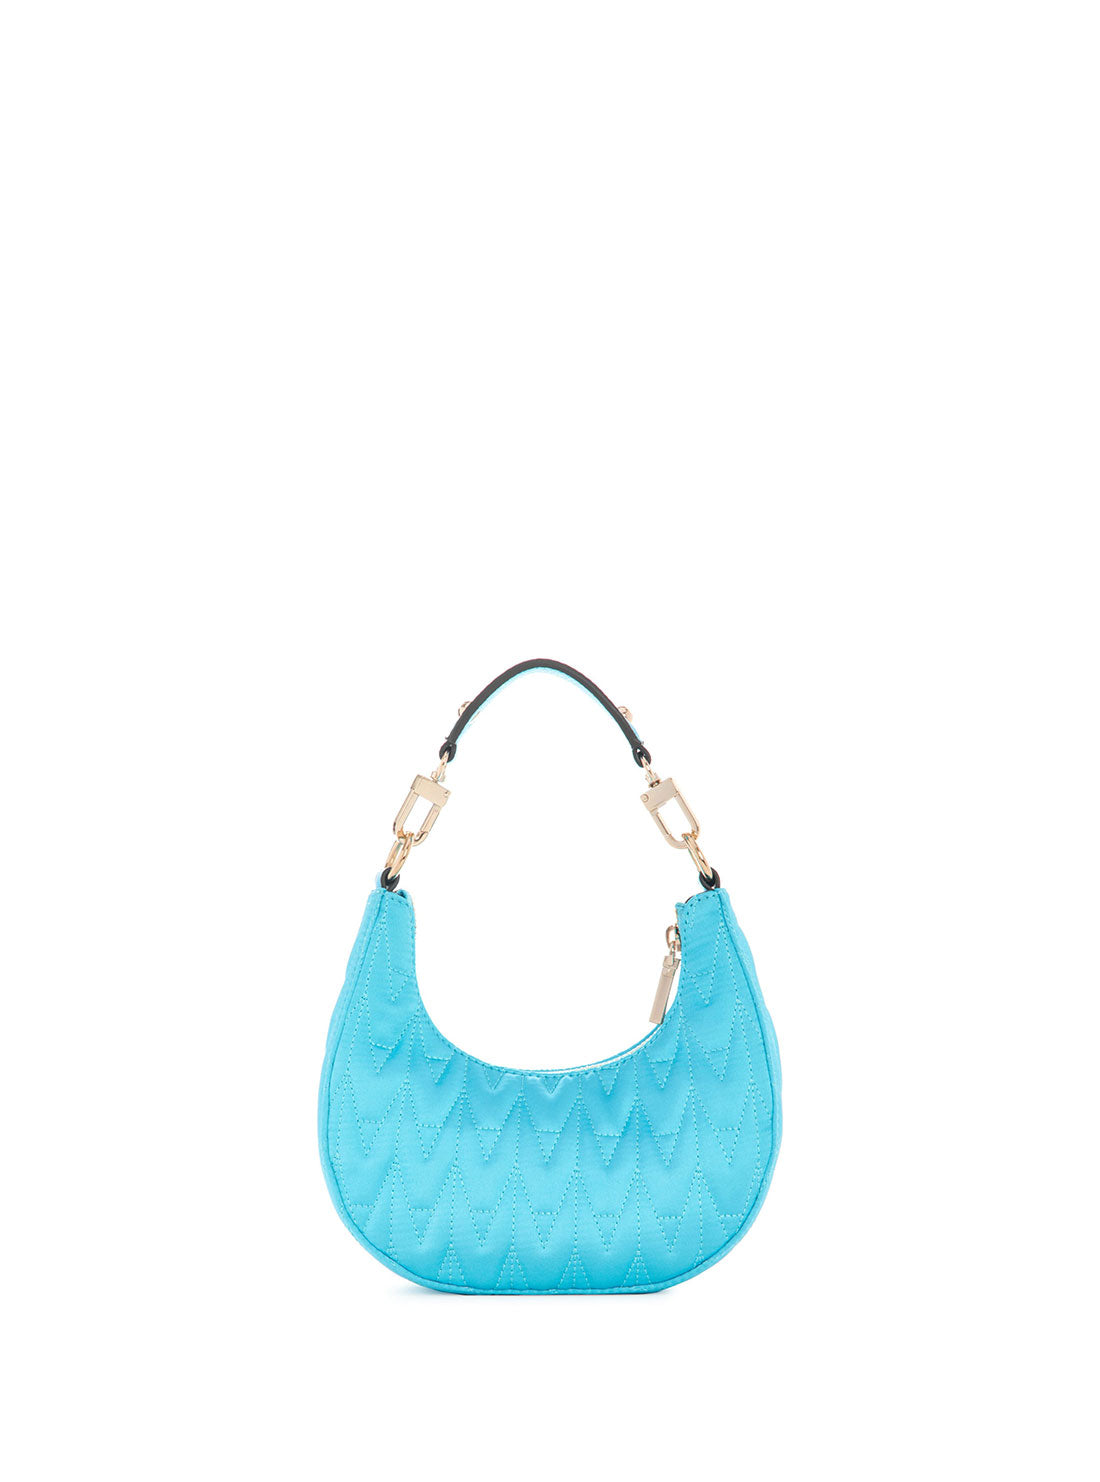 GUESS Women's Turquoise Golden Rock Mini Hobo Bag EG874972 Back View